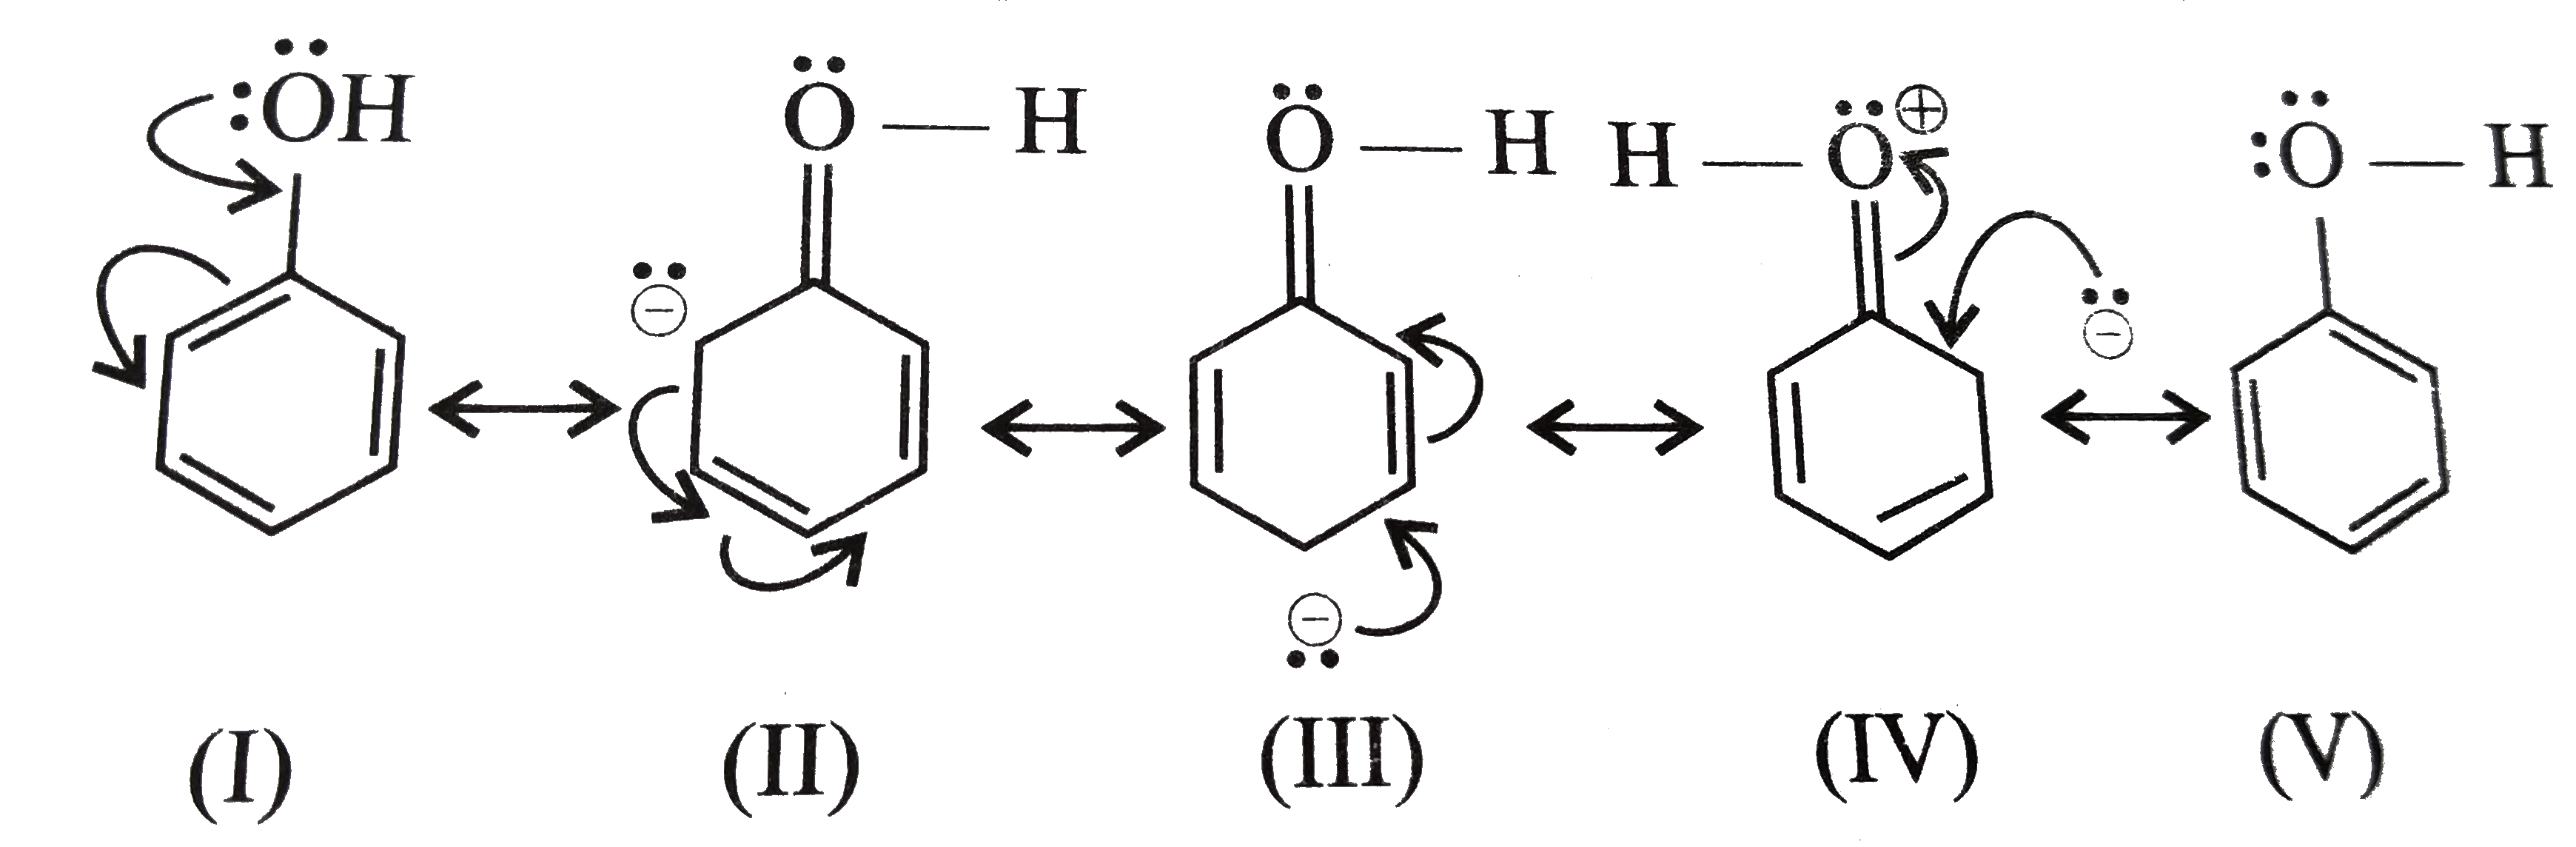 Odia] Draw the resonating structures of benzene diazonium salt.